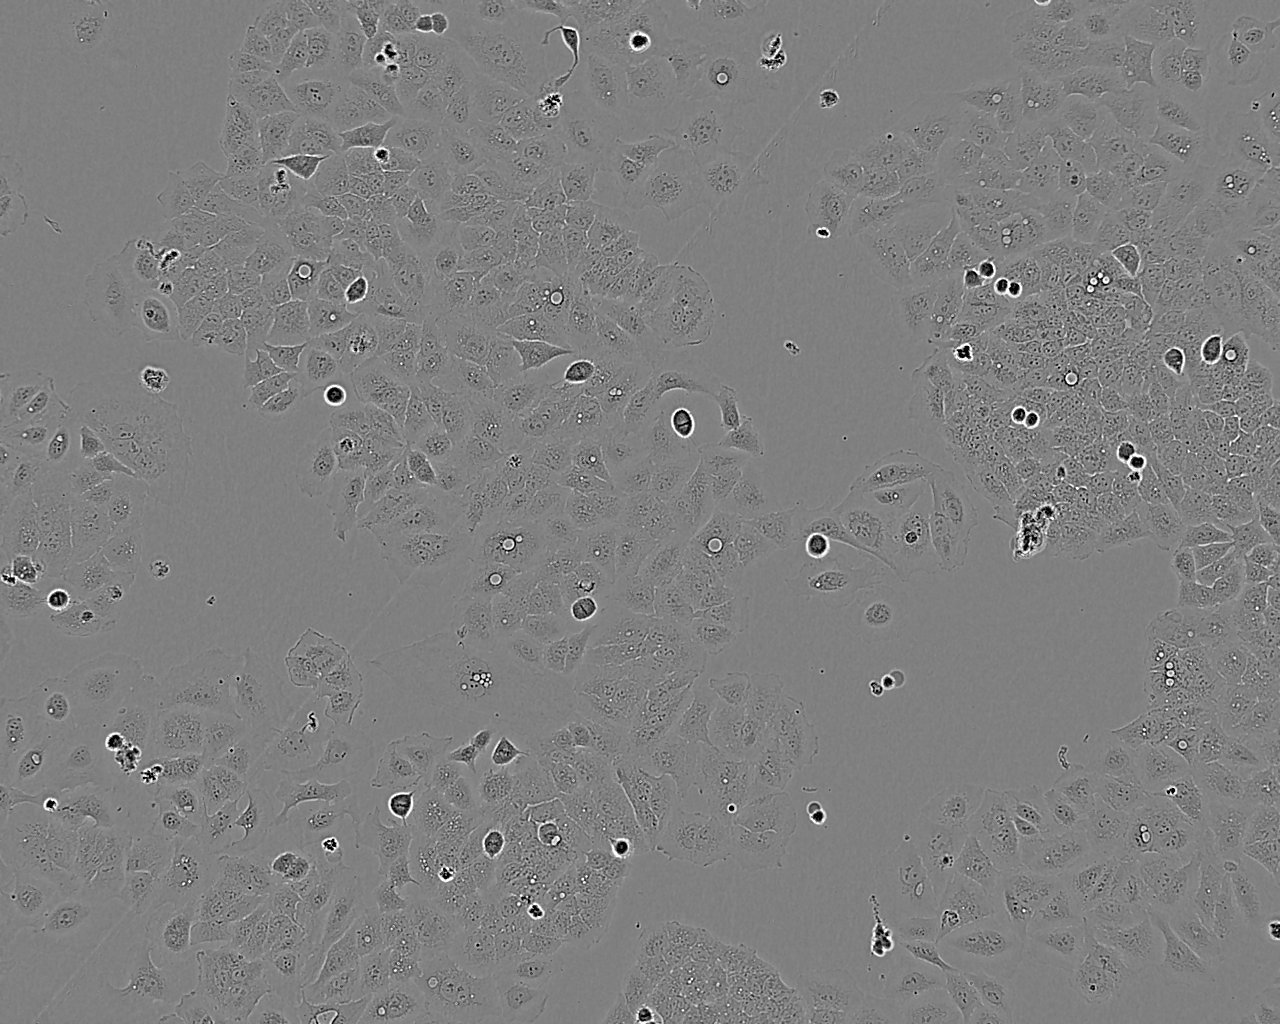 Ketr-3 epithelioid cells人肾癌细胞系,Ketr-3 epithelioid cells